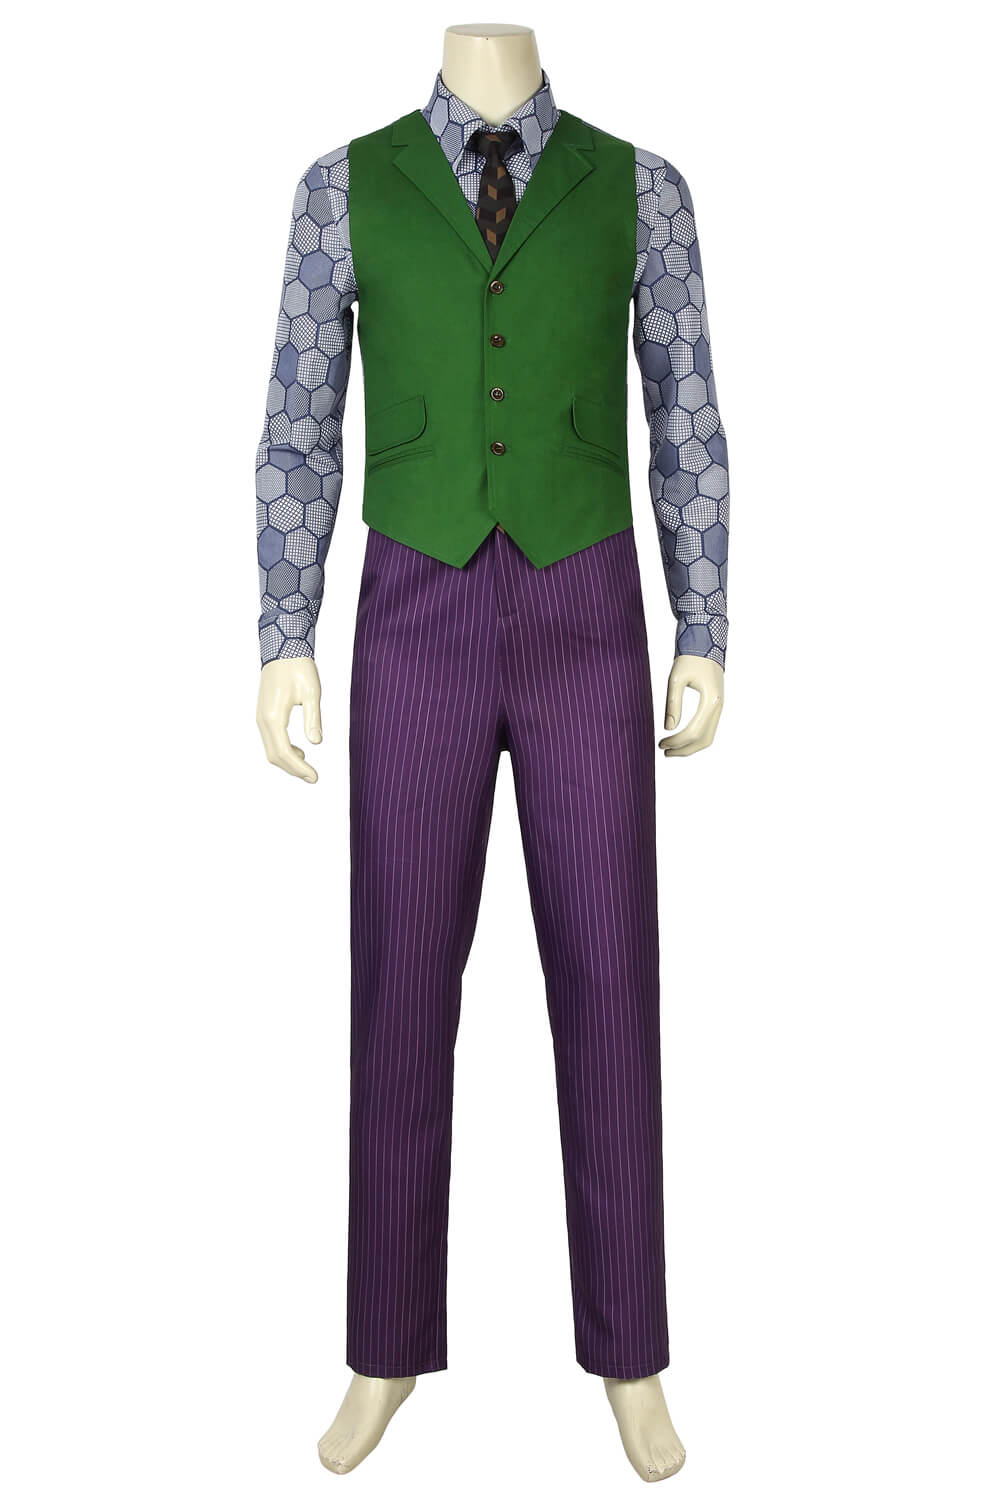 The Dark Knight Batman Joker Clown Purple Coat Cosplay Men Halloween Costume - ACcosplay